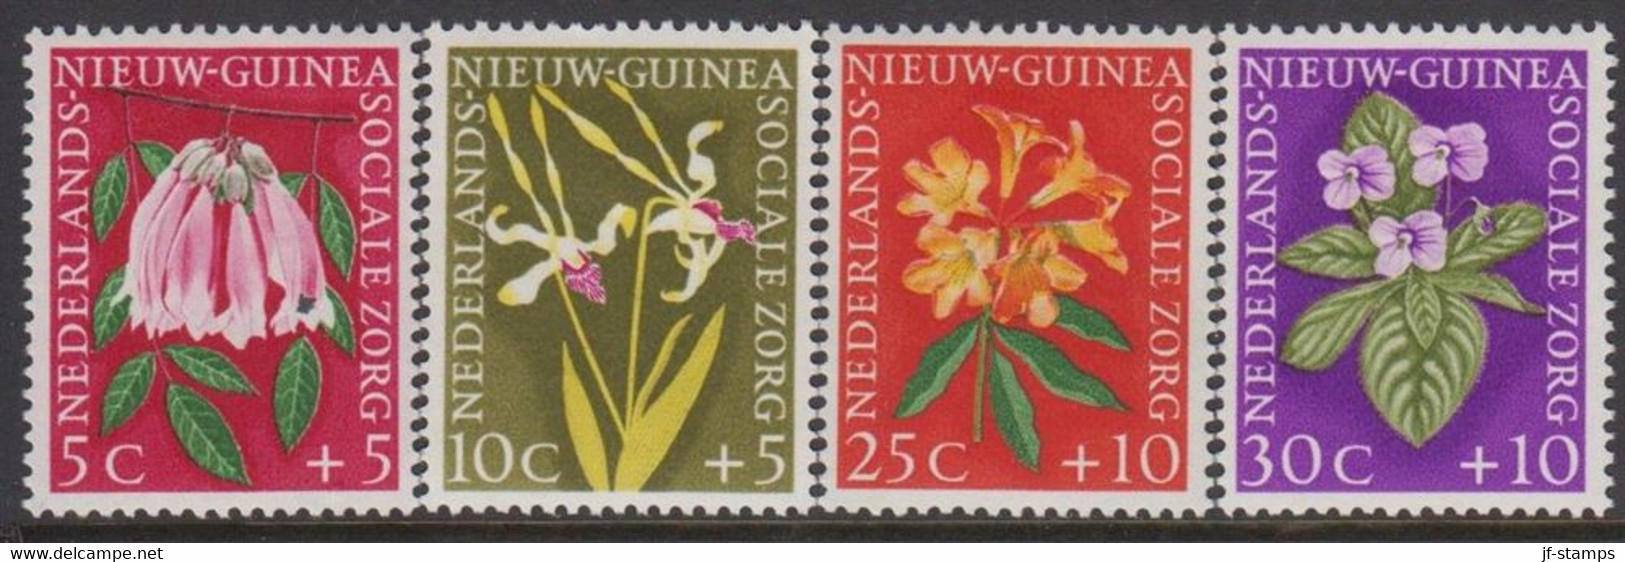 1959. NIEUW GUINEA. Flowers Complete Set Hinged.  - JF529305 - Nuova Guinea Olandese